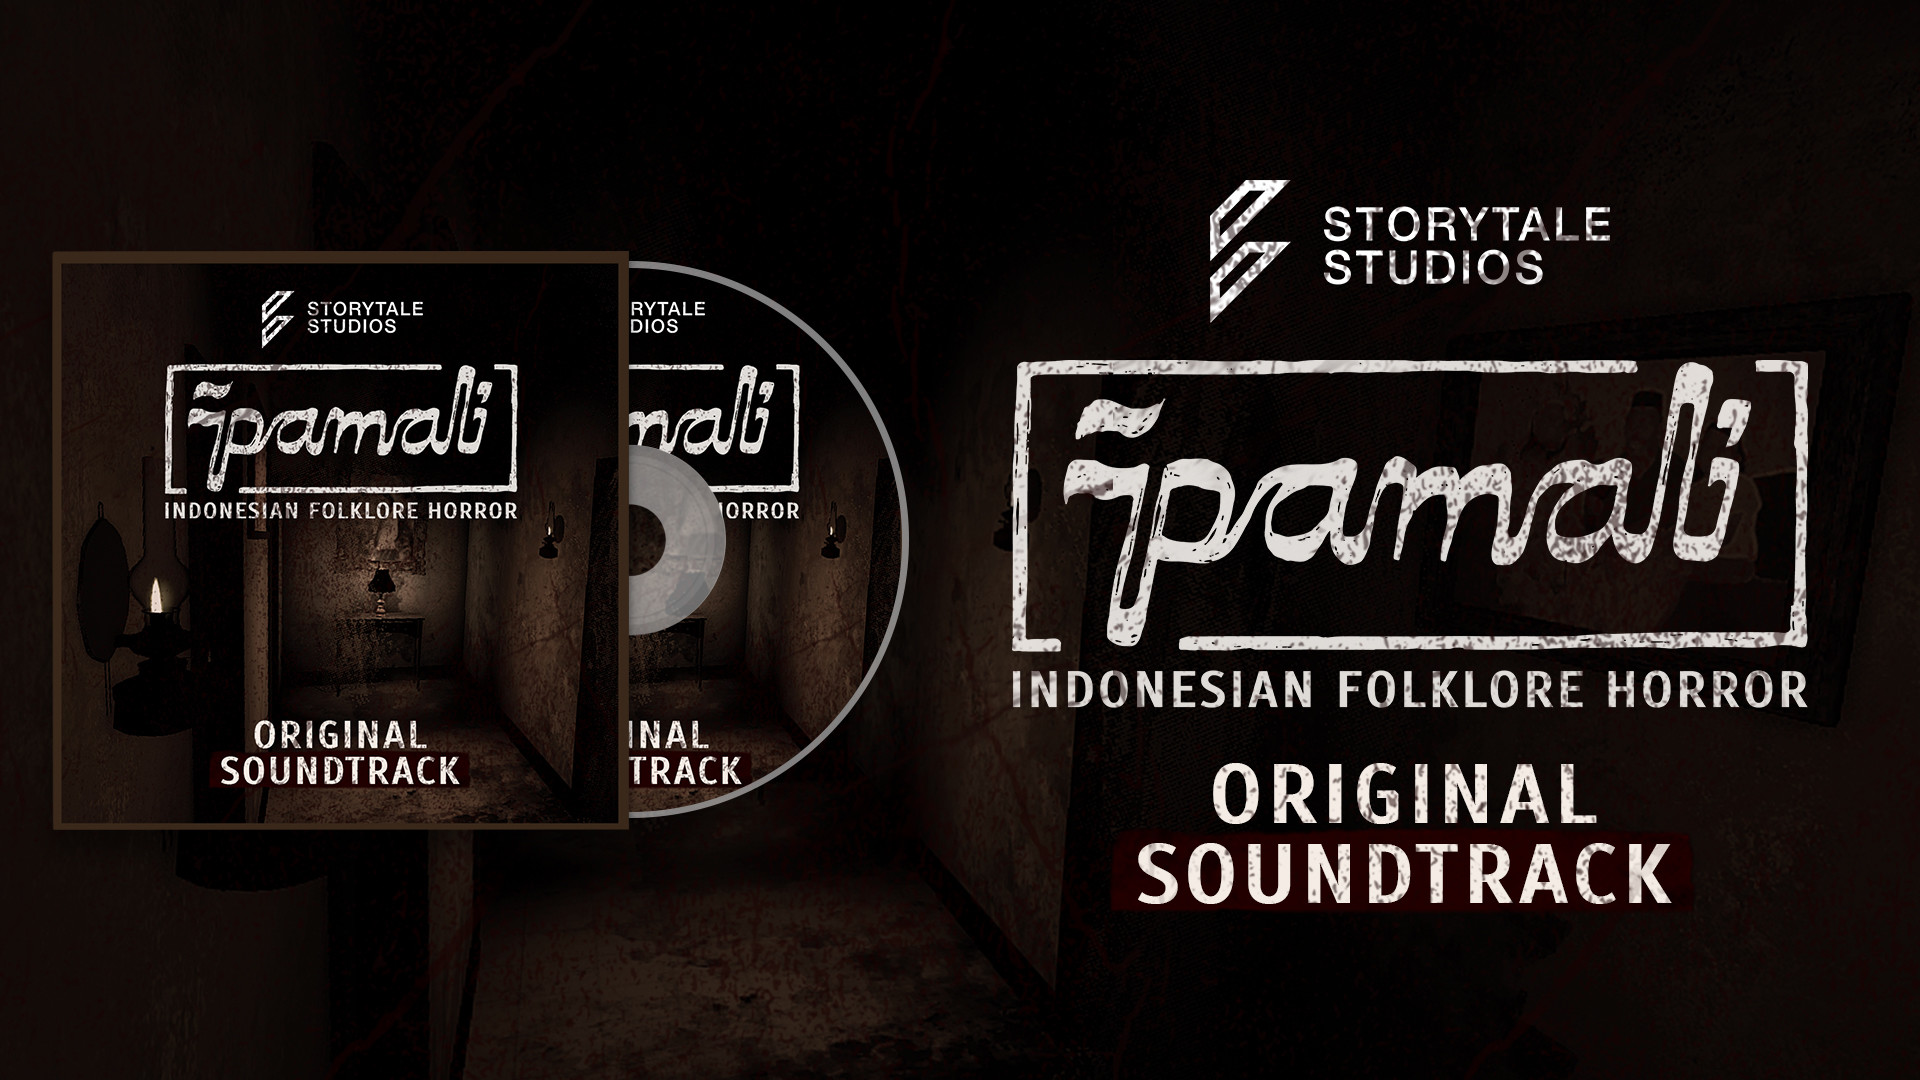 Pamali: Indonesian Folklore Horror - Original Soundtrack Featured Screenshot #1